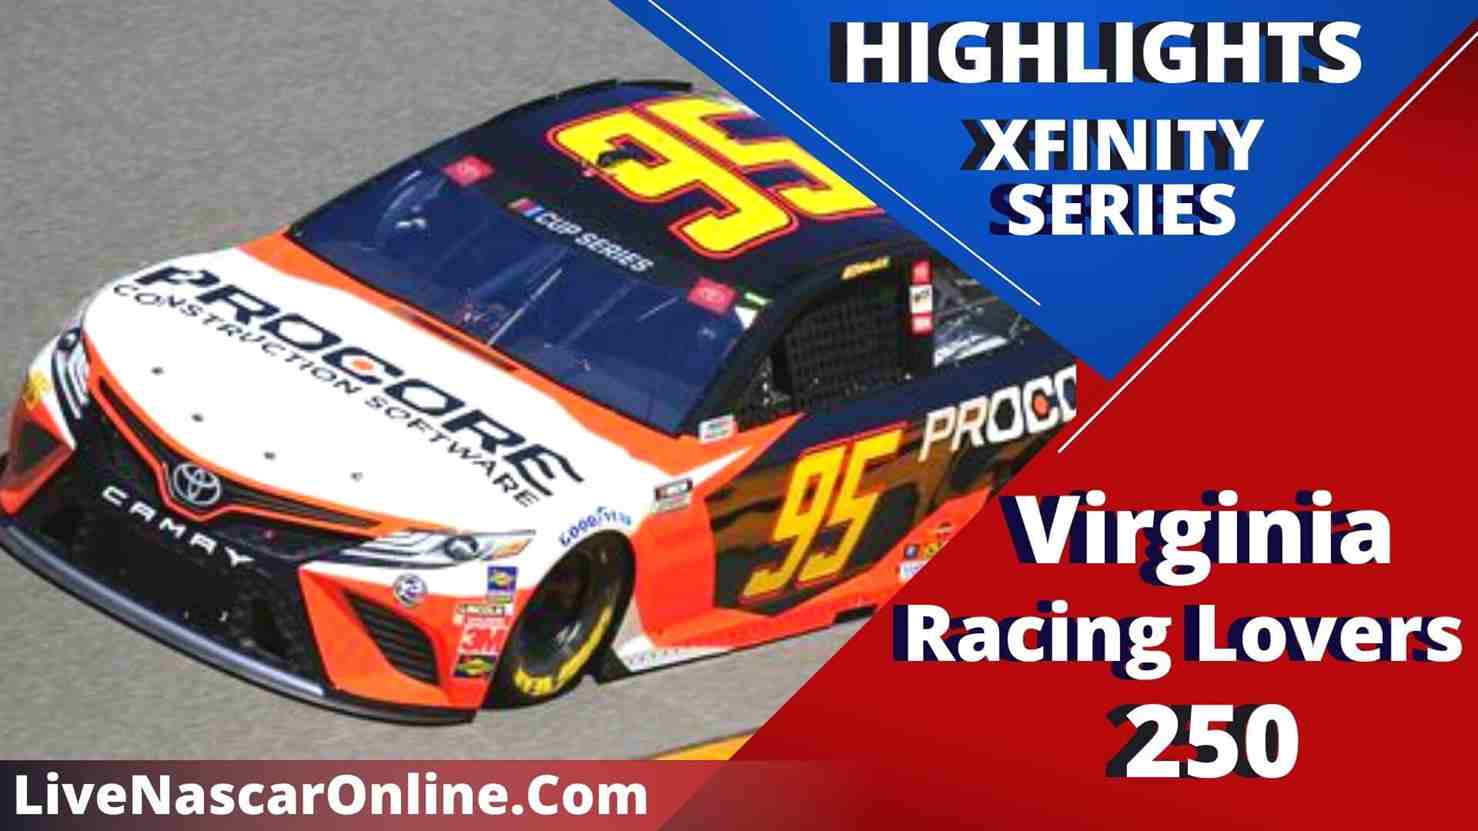 Virginia Racing Lovers 250 Highlights 2020